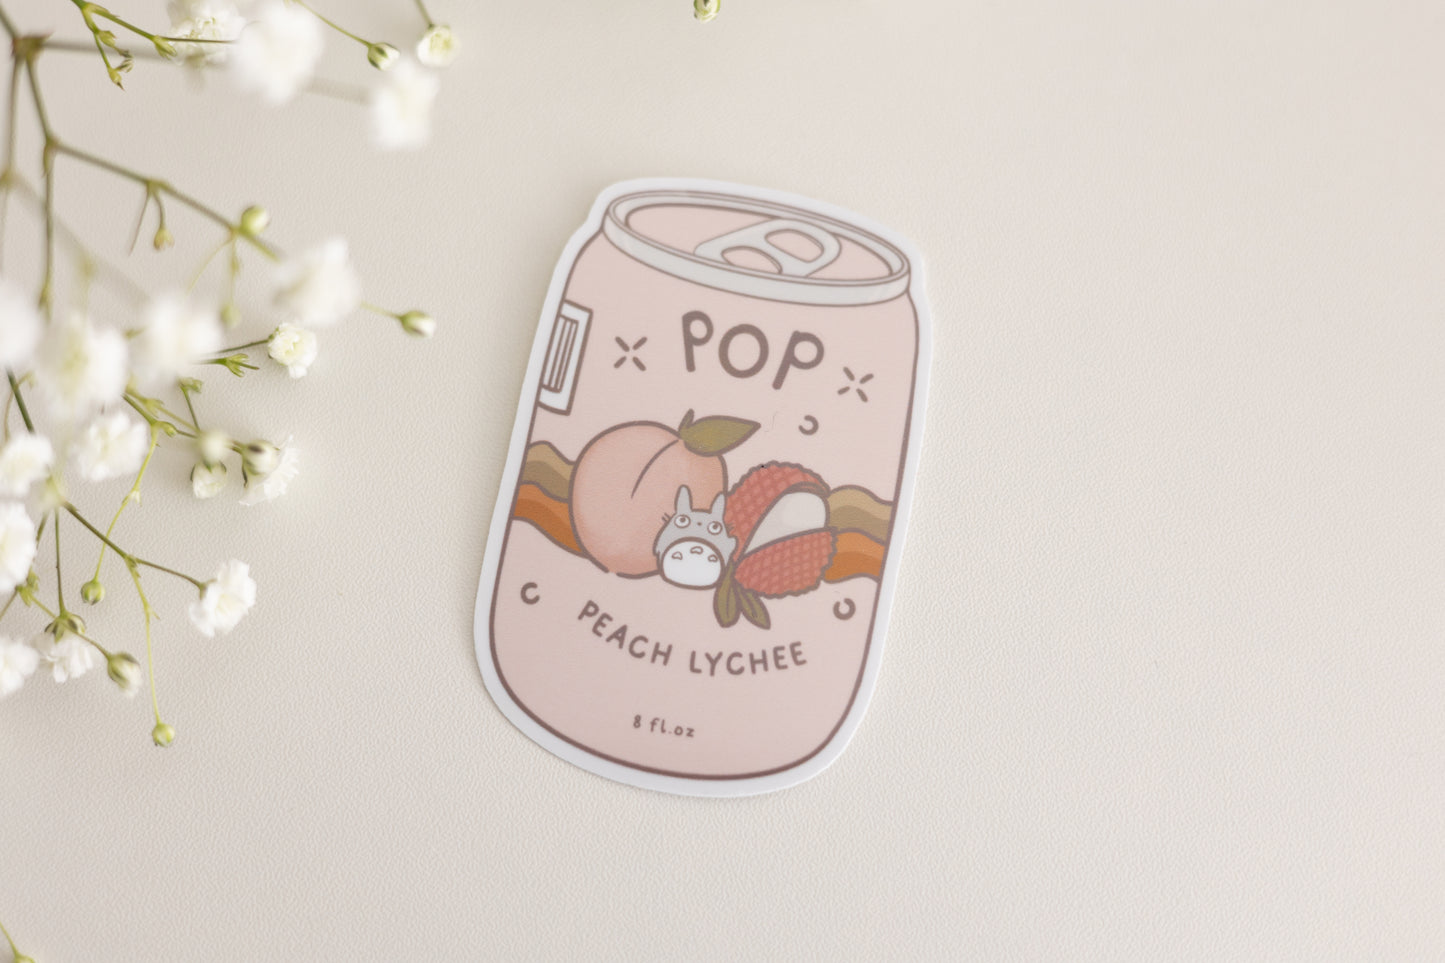 Totoro Soda Pop- Peach Lychee Sticker